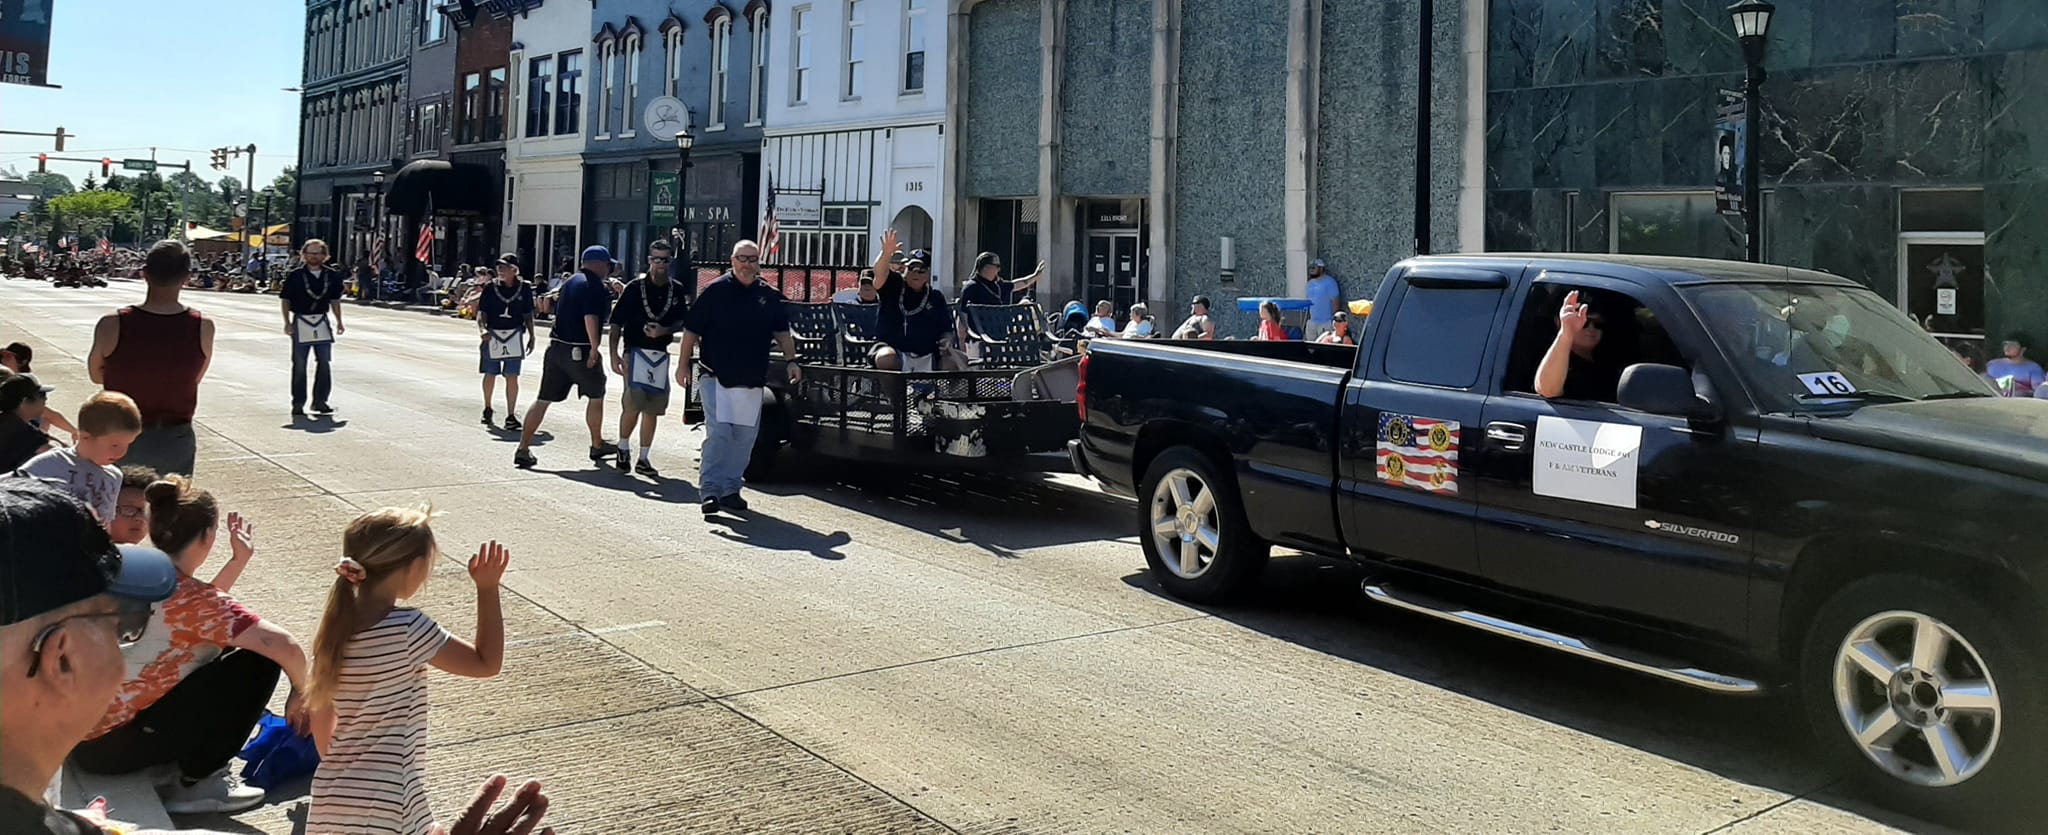 A black truck pulling a trailer in a parade, men walking beside trailer